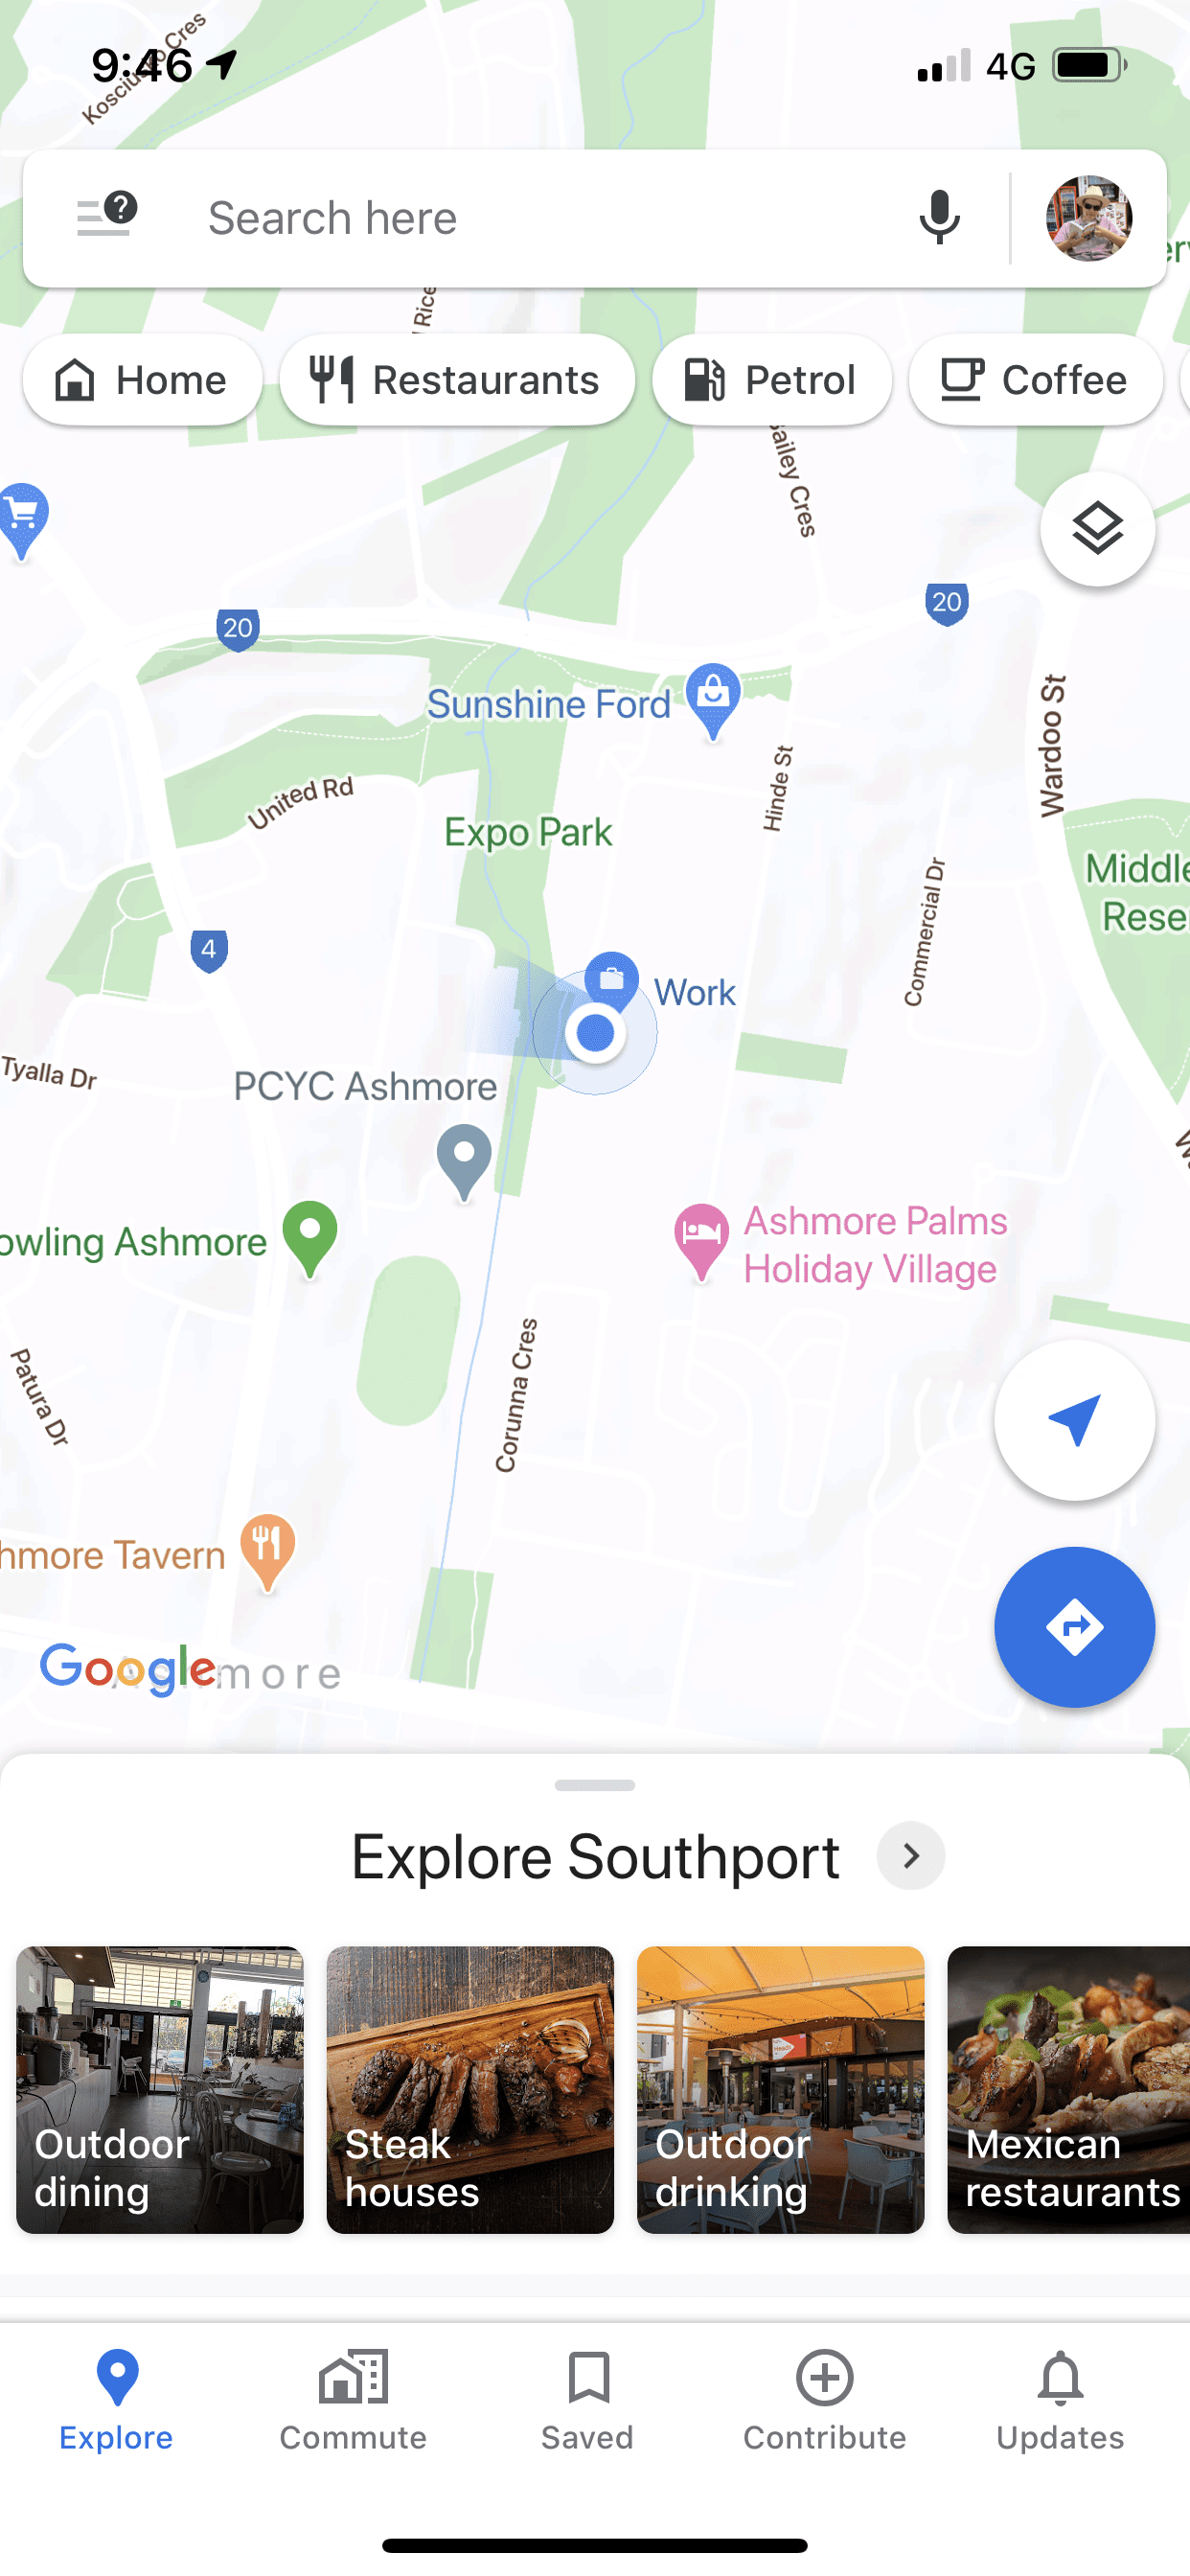 2020-Google-Maps-Update-explore